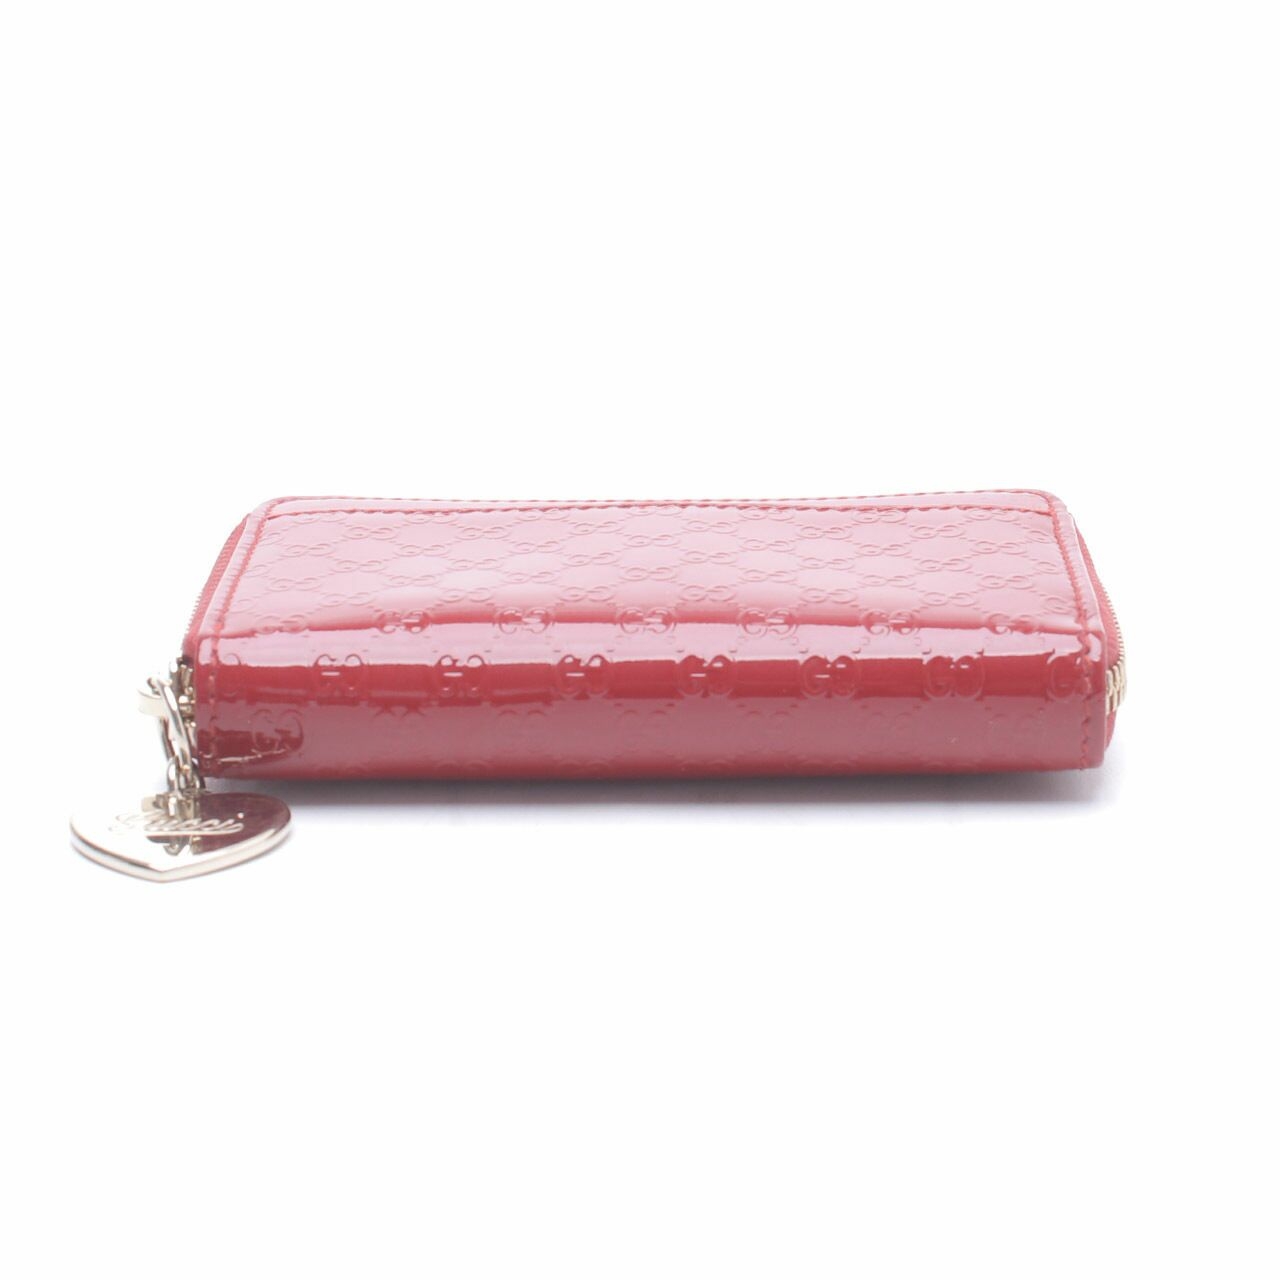 Gucci Guccissima Red Card Case Zip Around Wallet